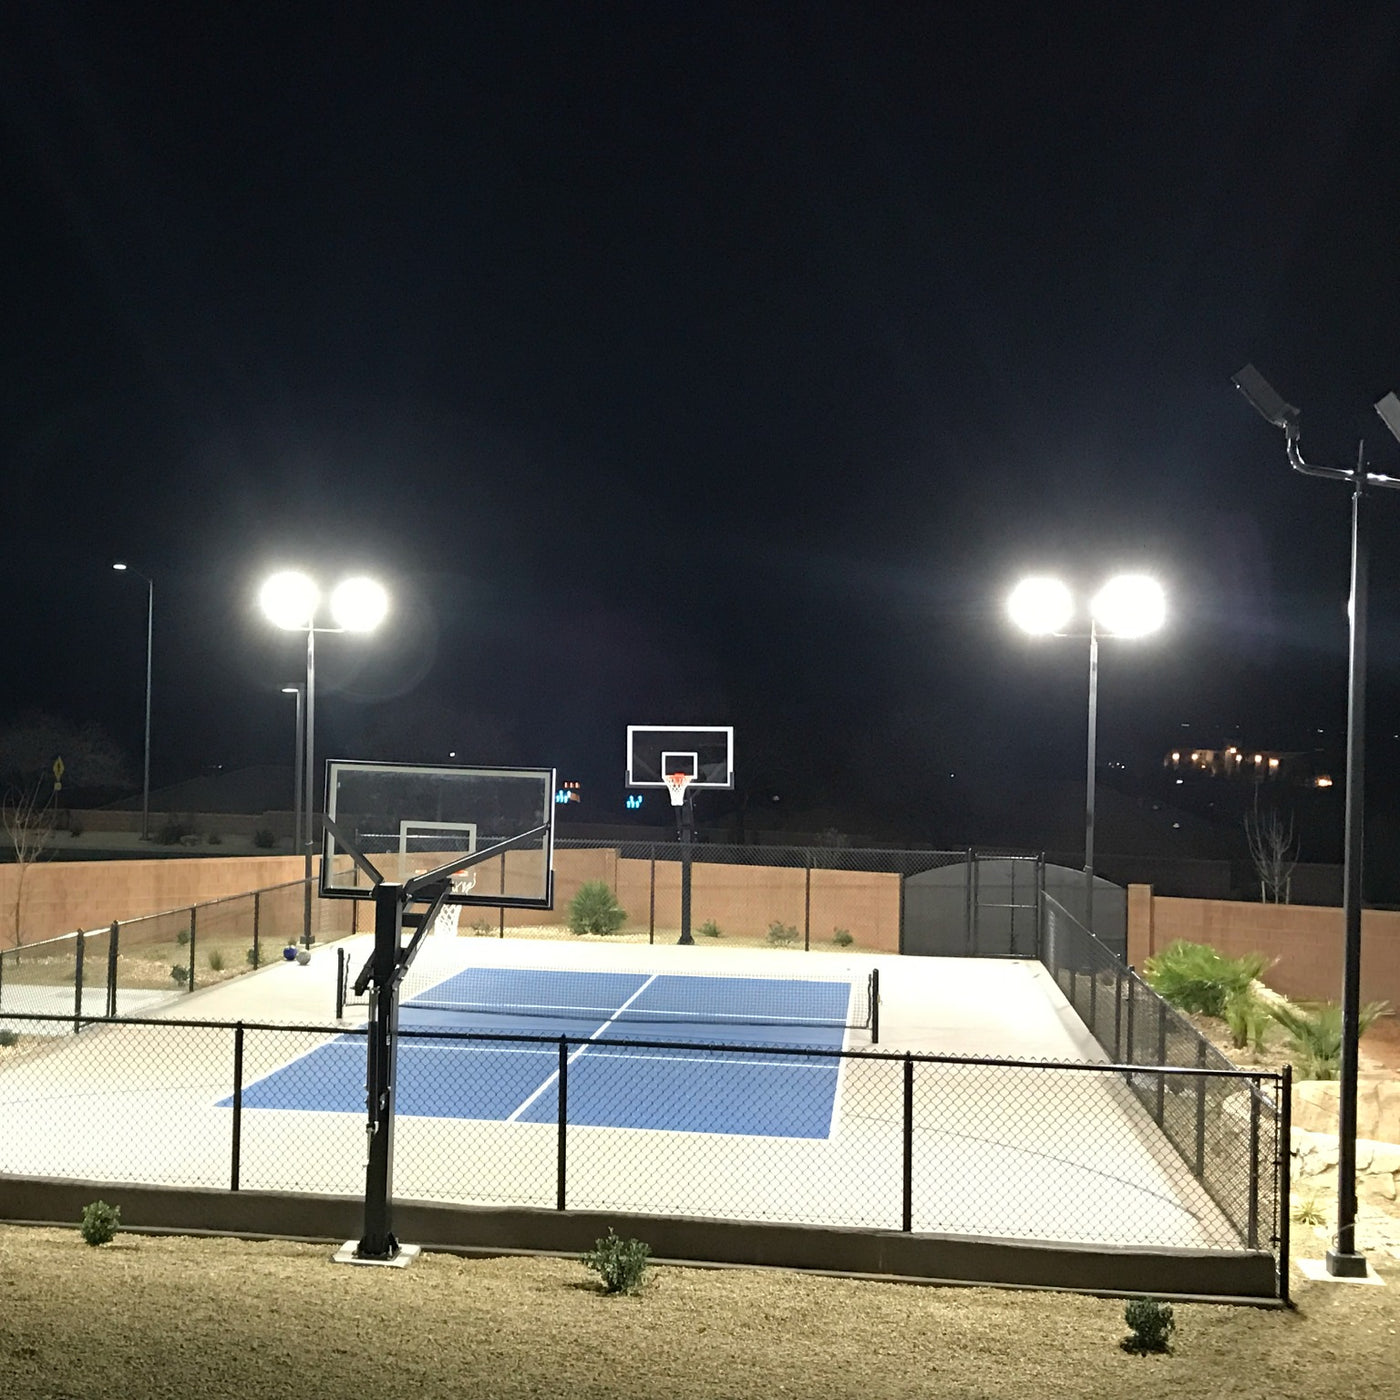 Incredible Backyard Sports Court - Saint George, Utah